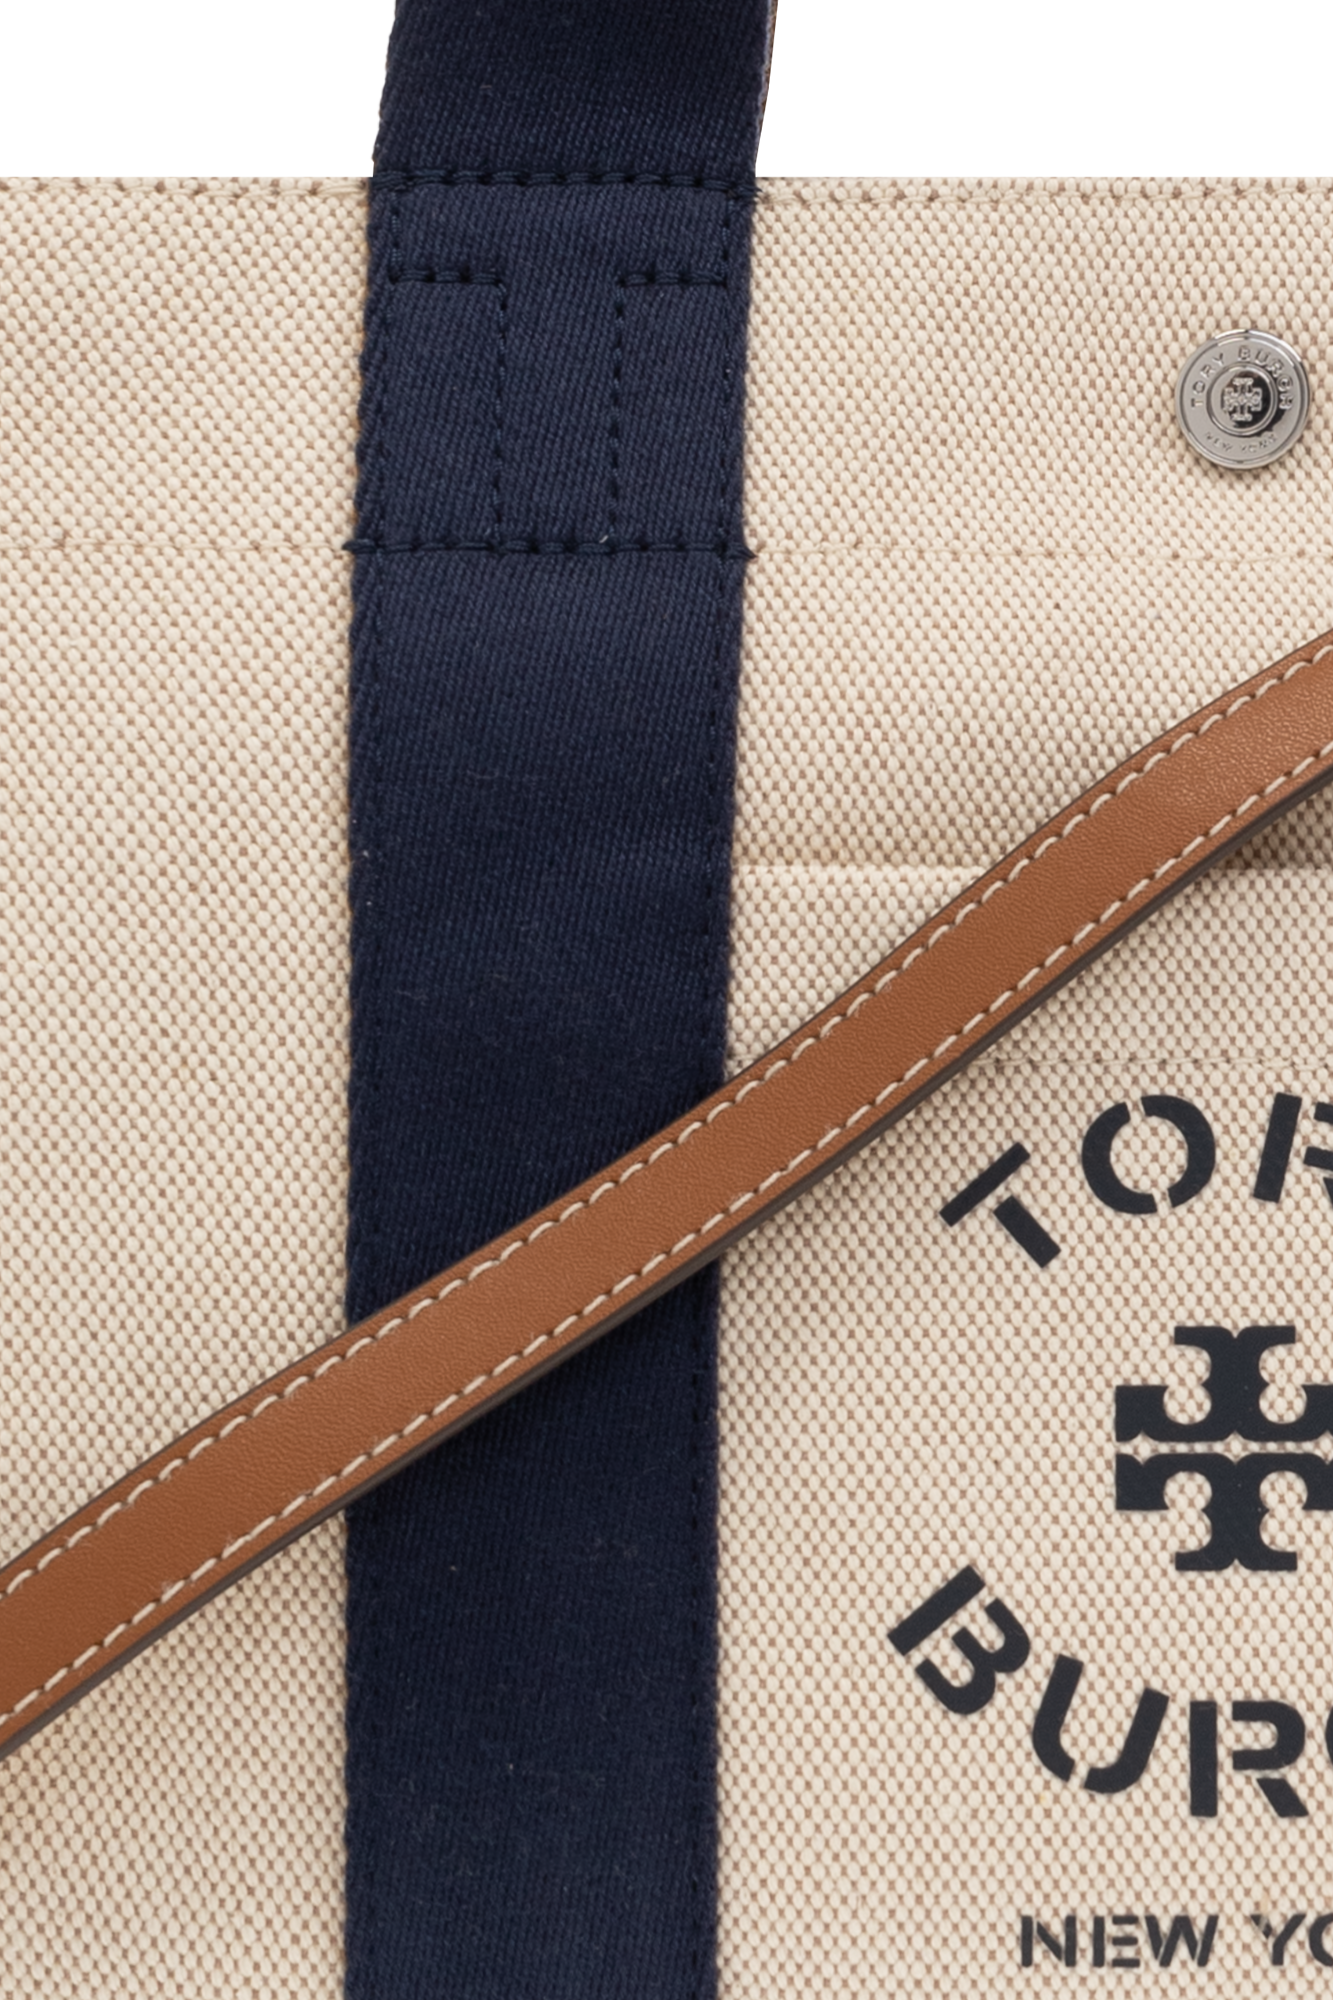 Tory Burch ‘Tory Small’ shoulder bag